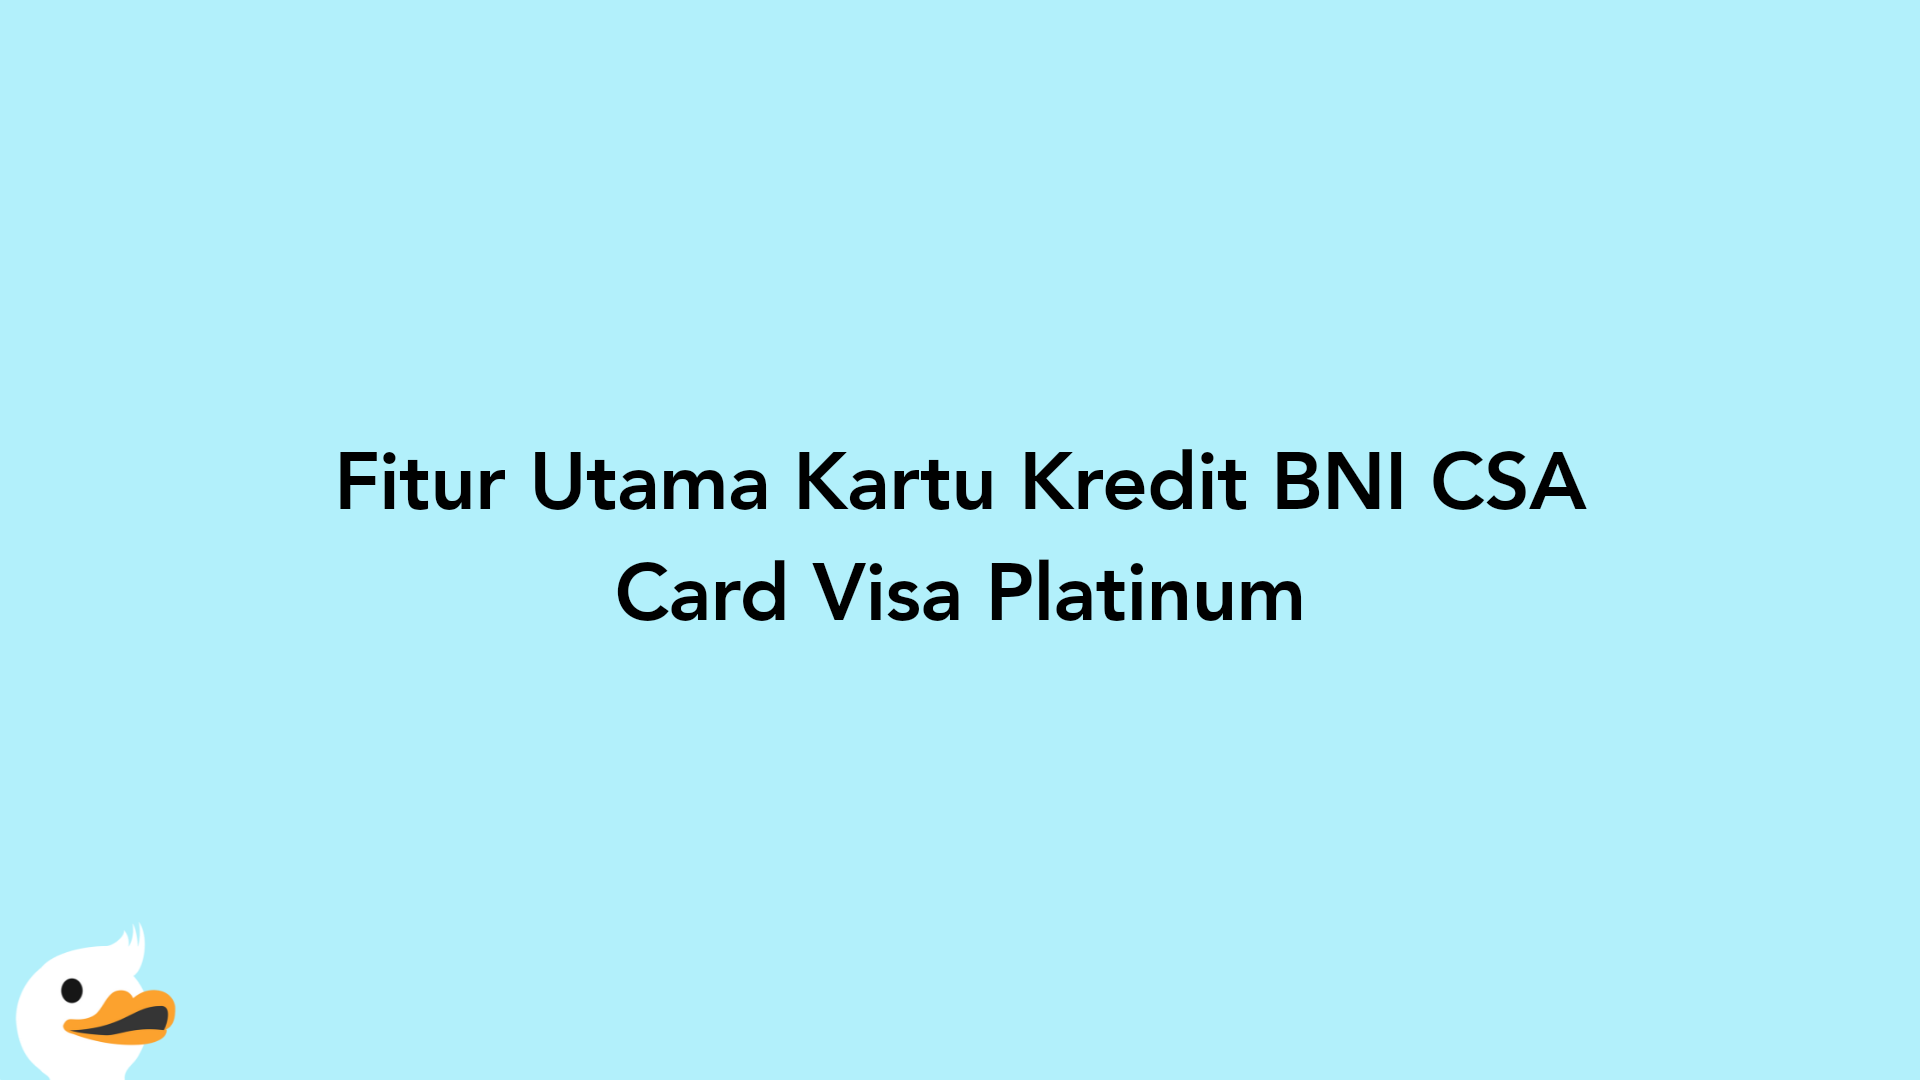 Fitur Utama Kartu Kredit BNI CSA Card Visa Platinum